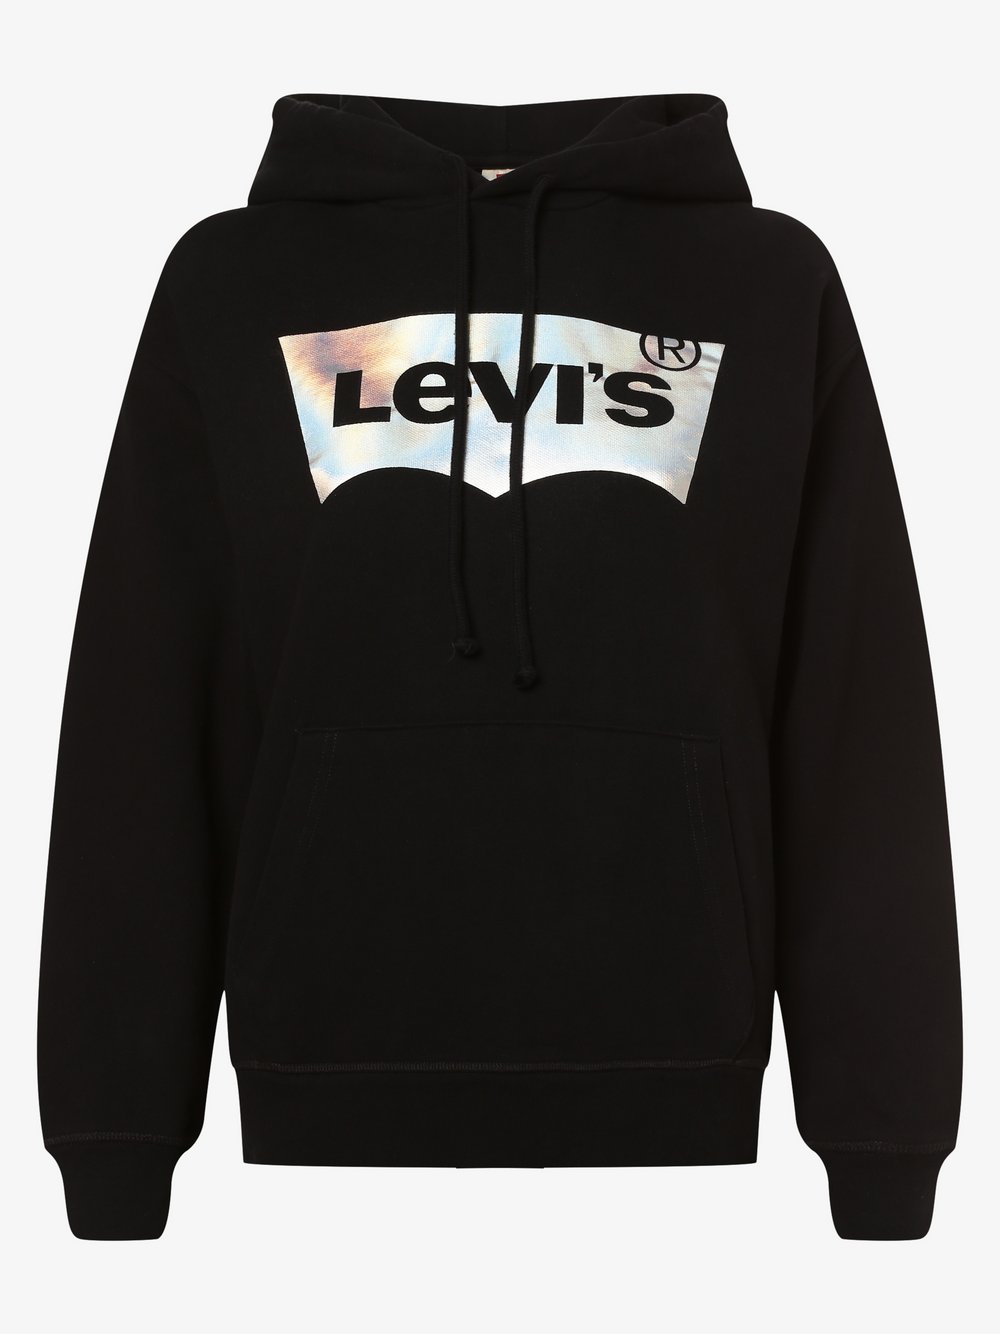 Levi's - Damska bluza z kapturem, czarny